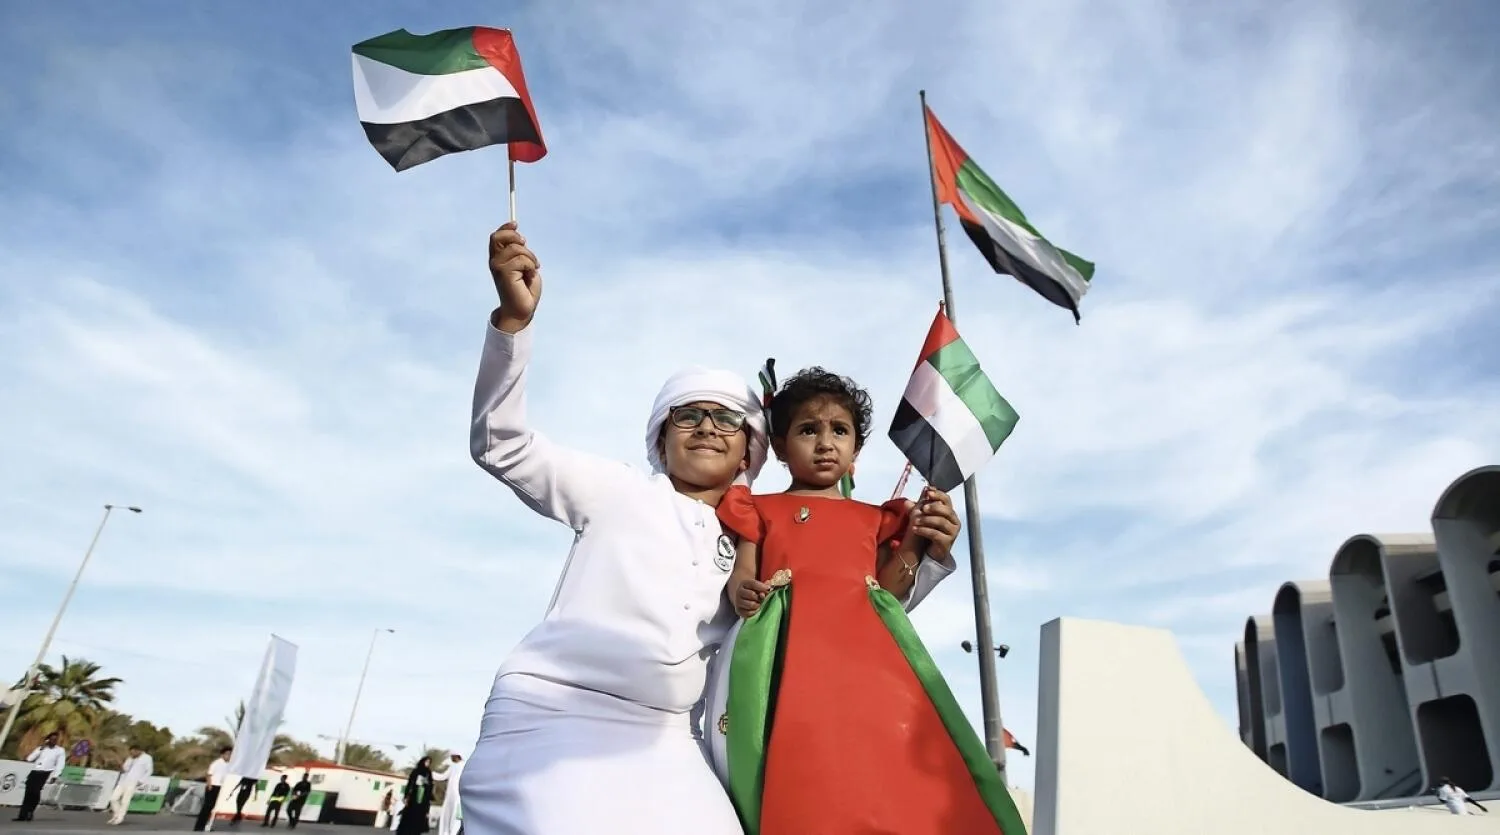 Public Holidays in UAE in 2023